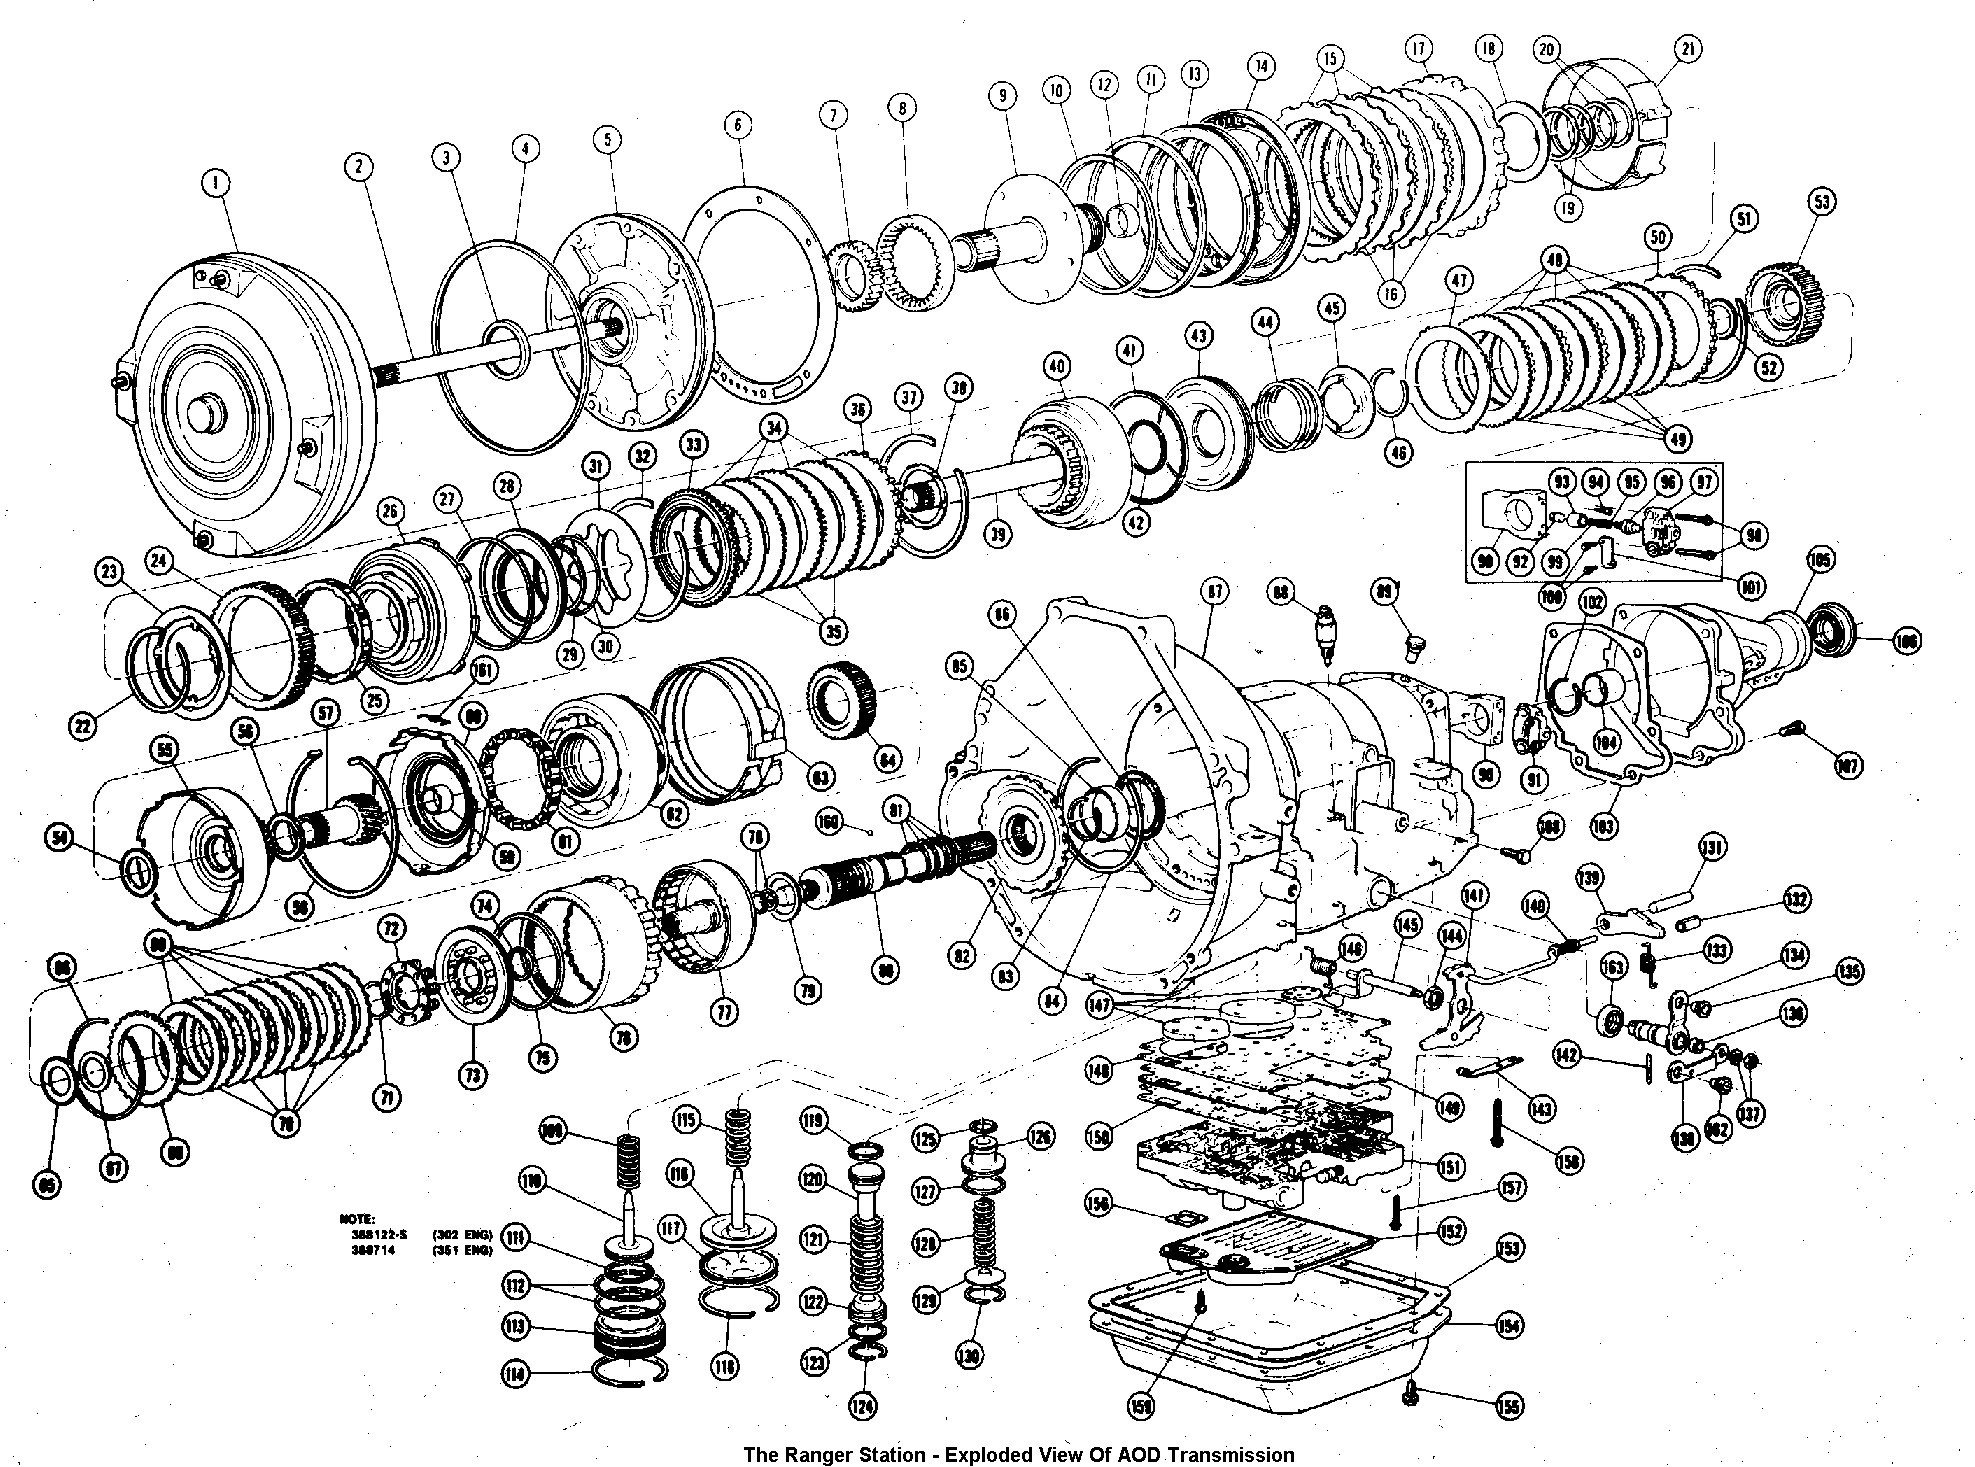 Manual Transmission Parts Diagram 1993 ford Mustang Automatic Transmission 7 92 Mustang Info Of Manual Transmission Parts Diagram